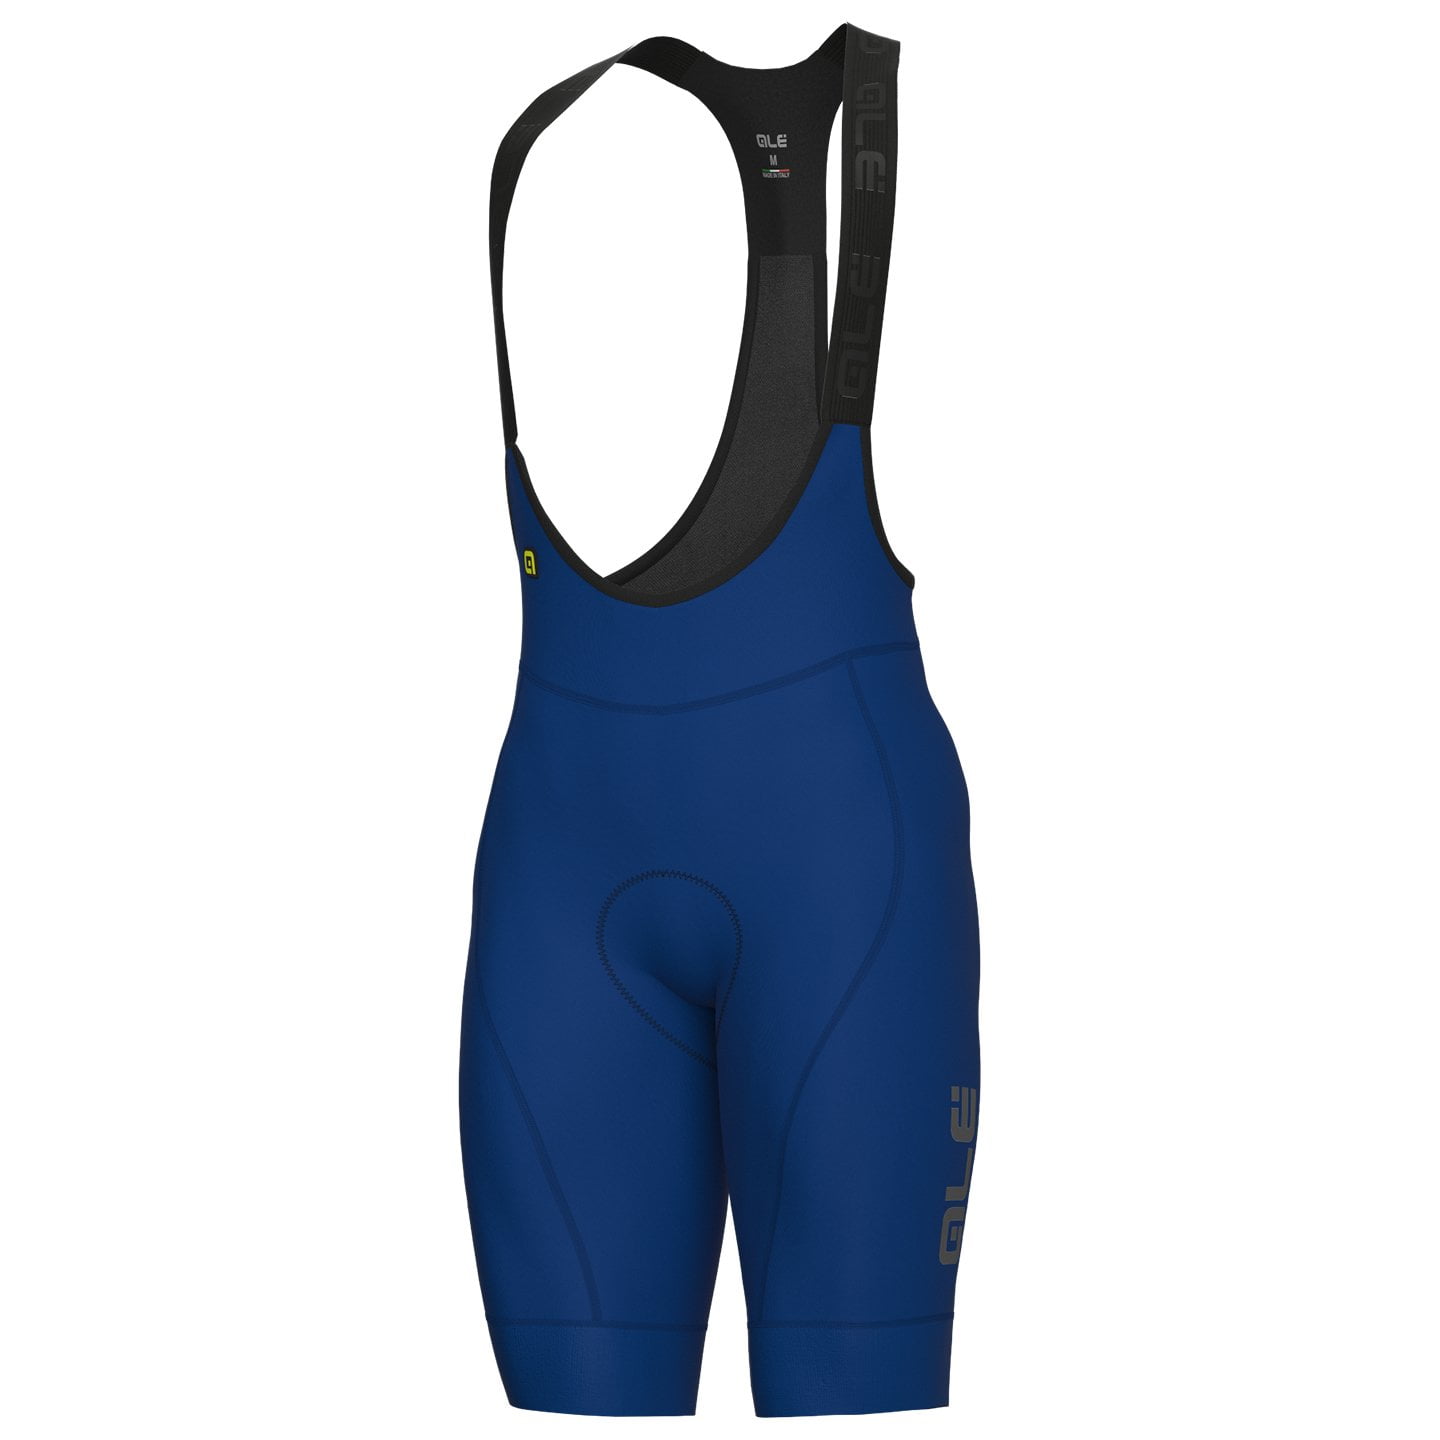 ALE Magic Colour Bib Shorts Bib Shorts, for men, size 2XL, Cycle shorts, Cycling clothing